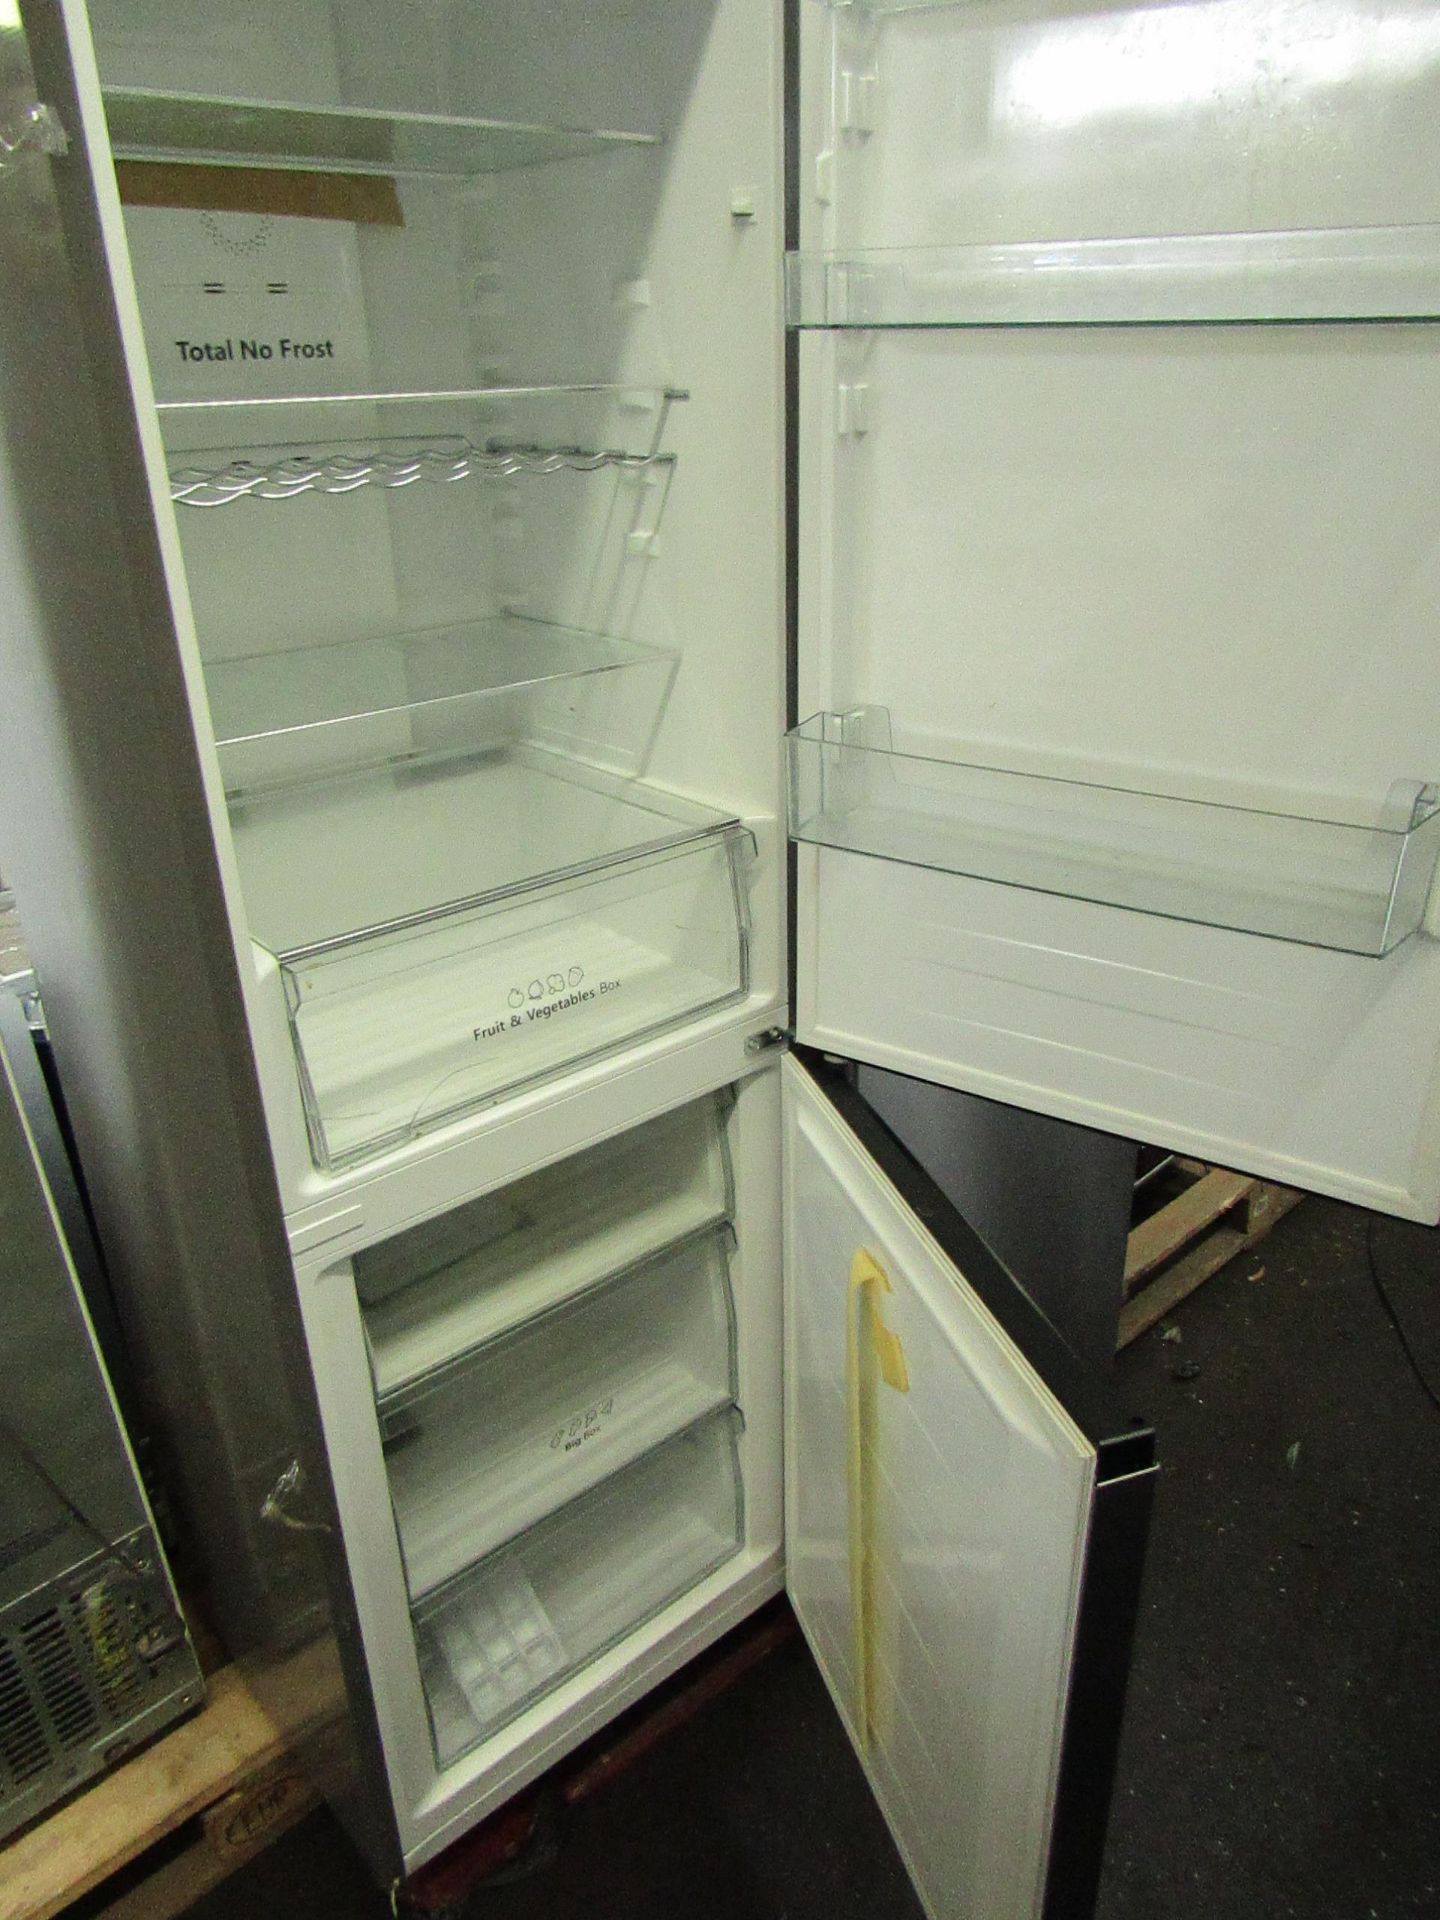 Hisense 60/40 fridge freezer, Powers on and the freezer gets cold but the fridge does not - Image 2 of 2